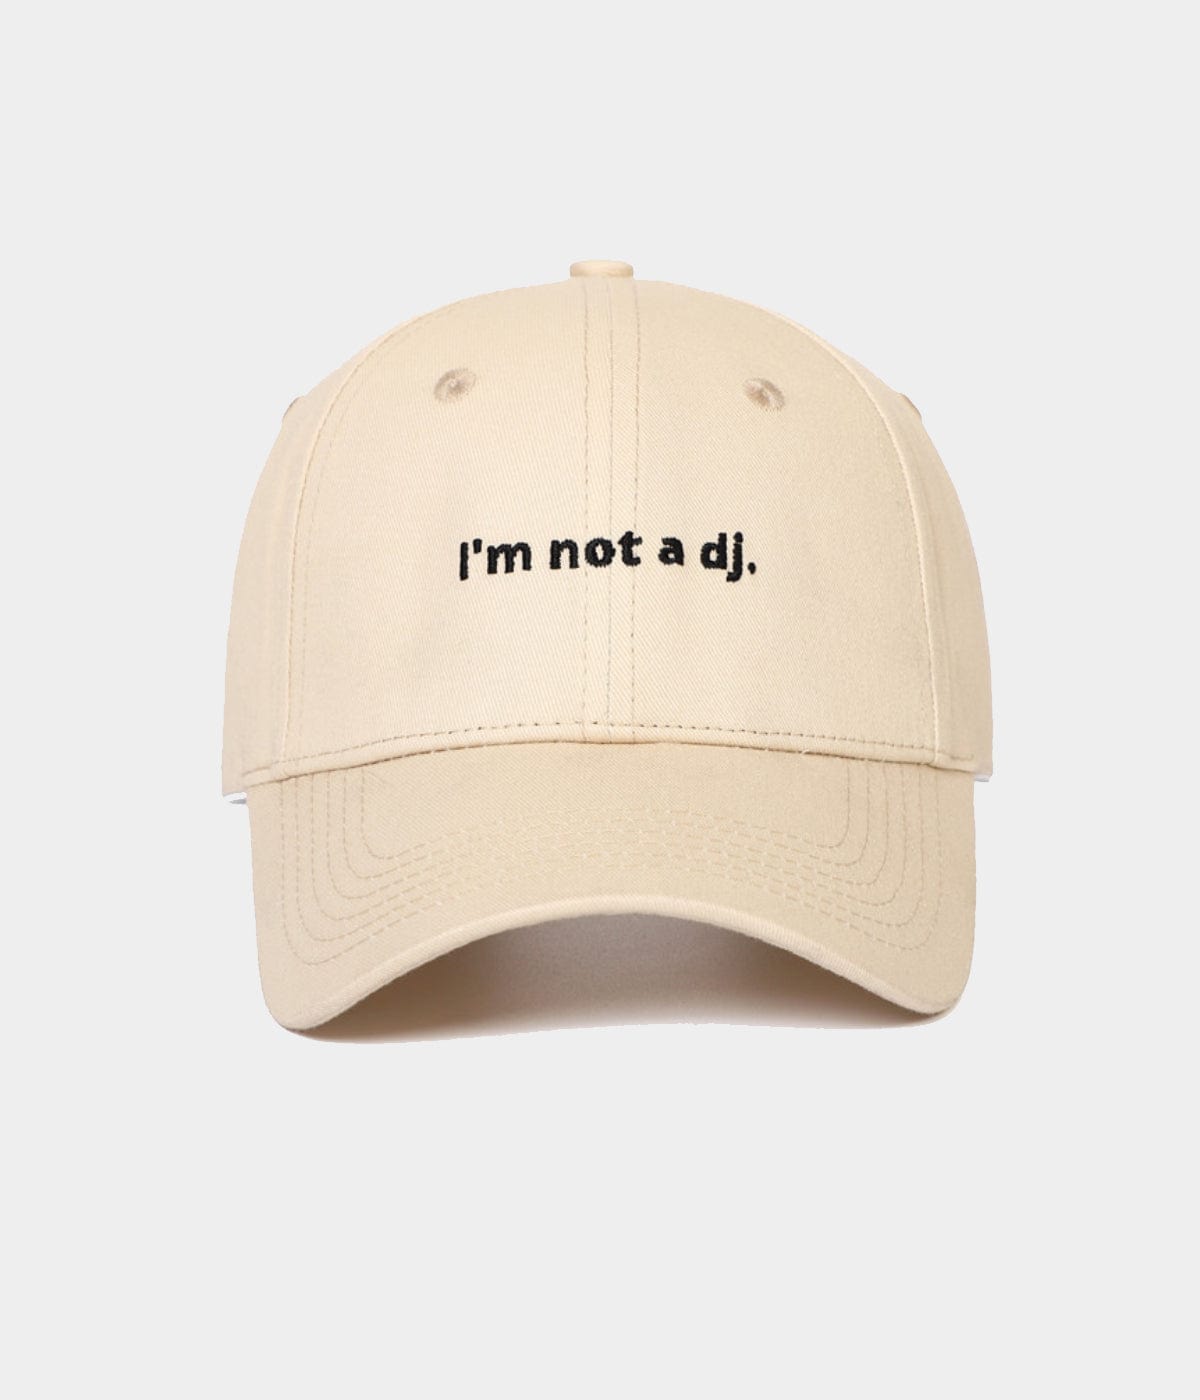 I'M NOT A DJ.